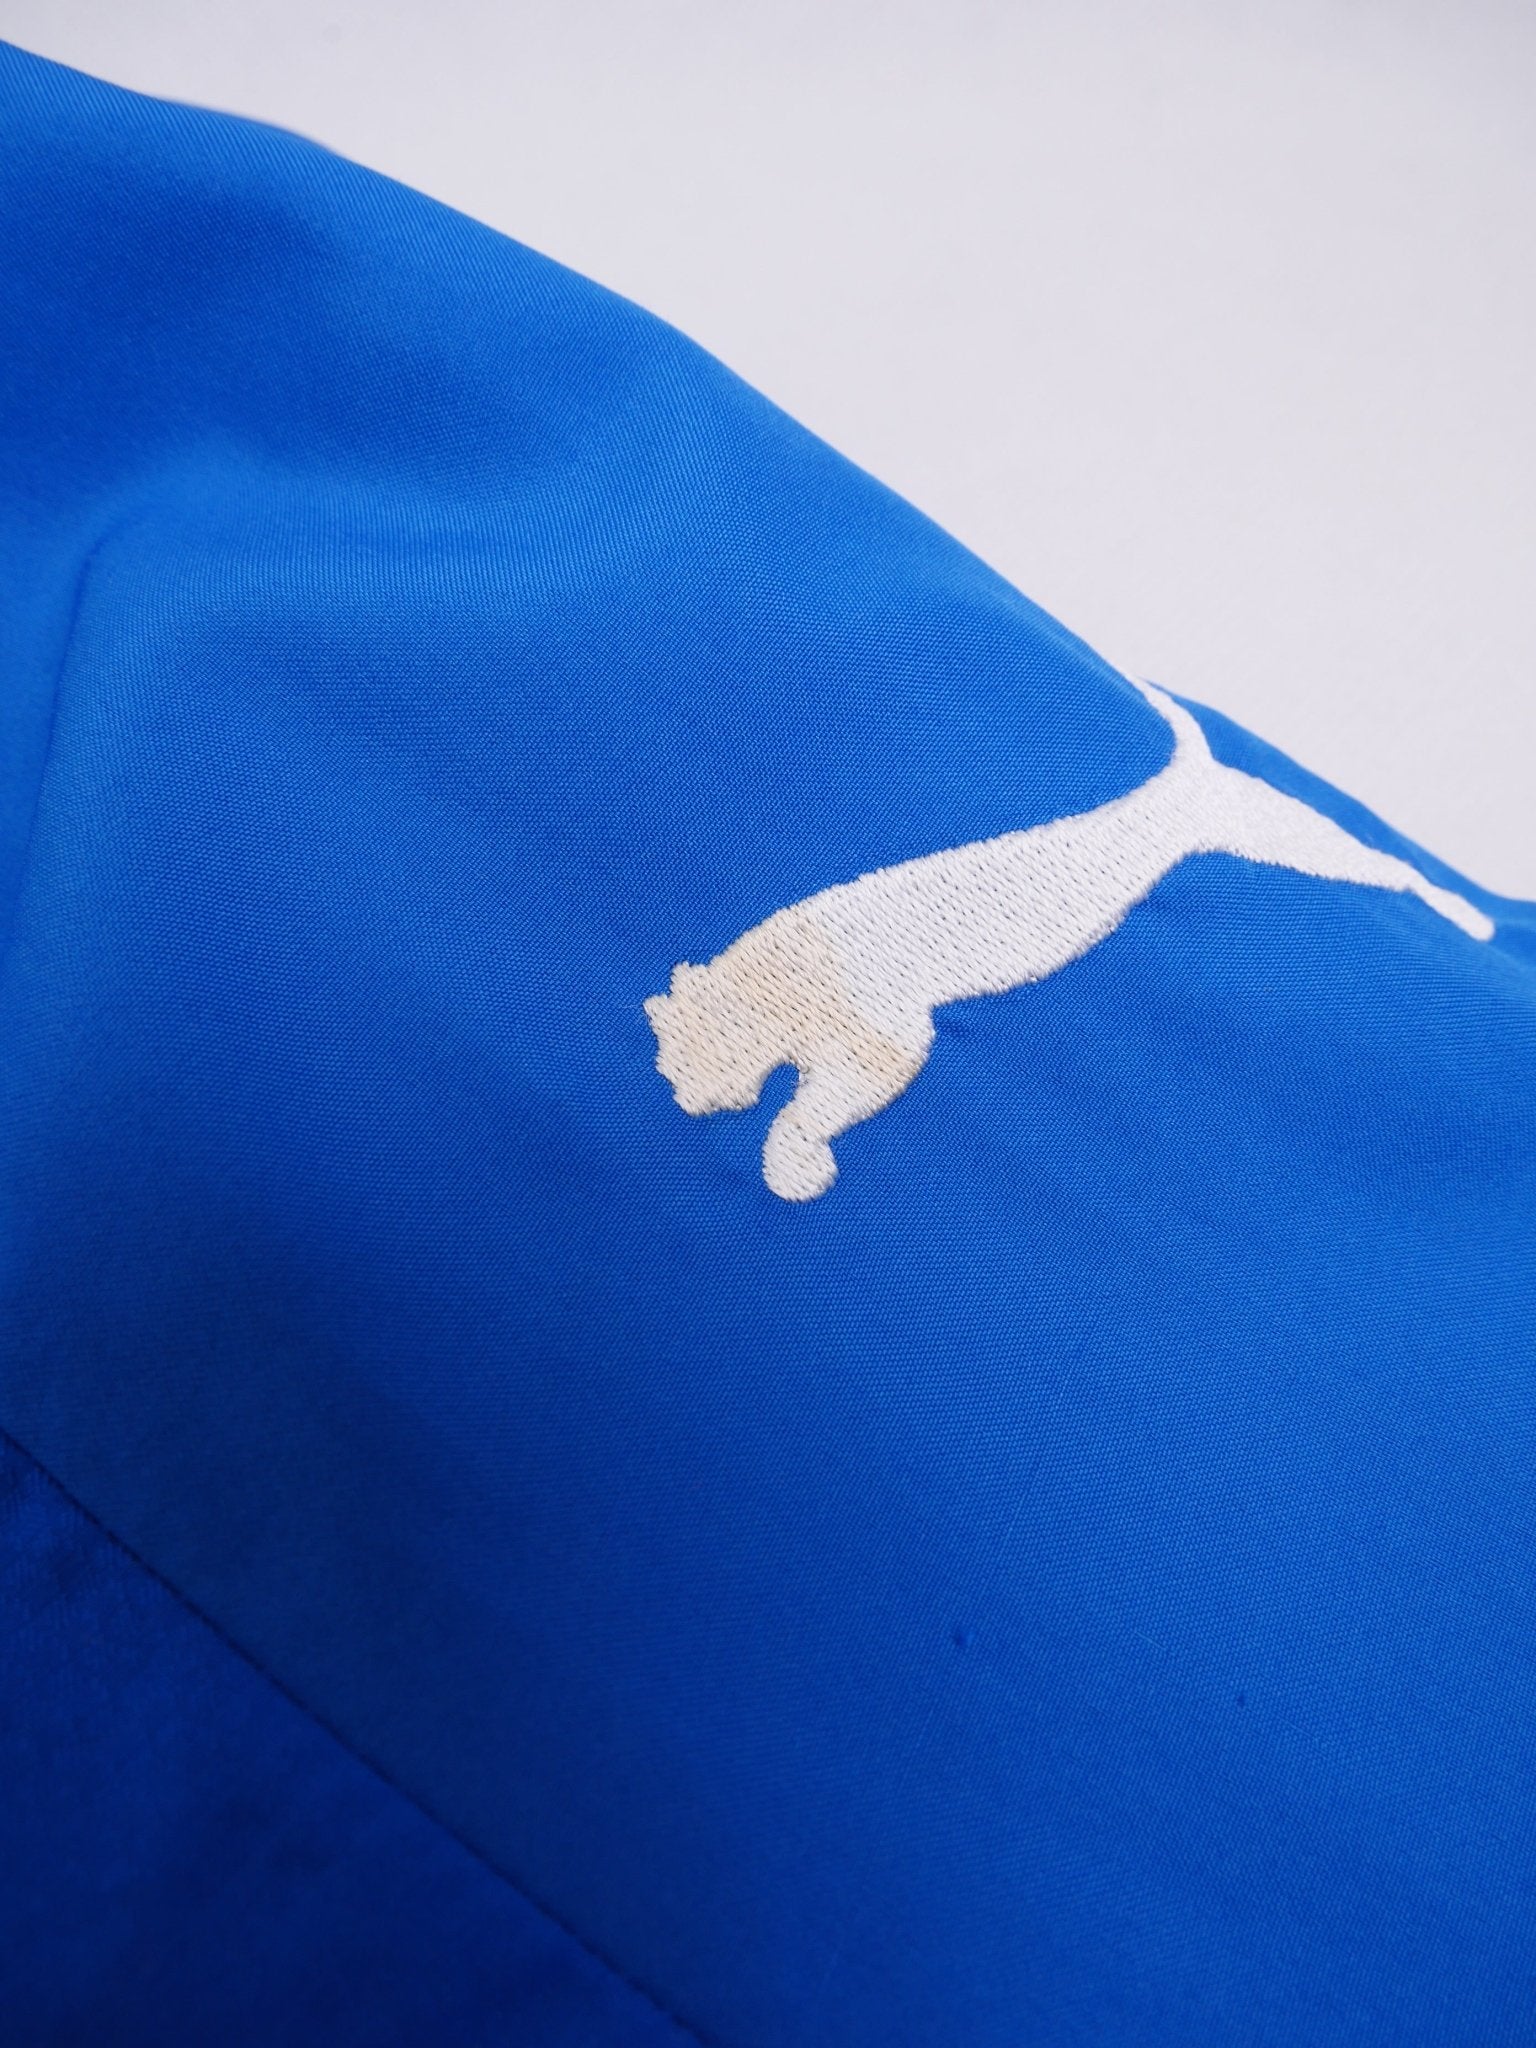 puma Soccer embroidered Logo blue Track Jacket - Peeces